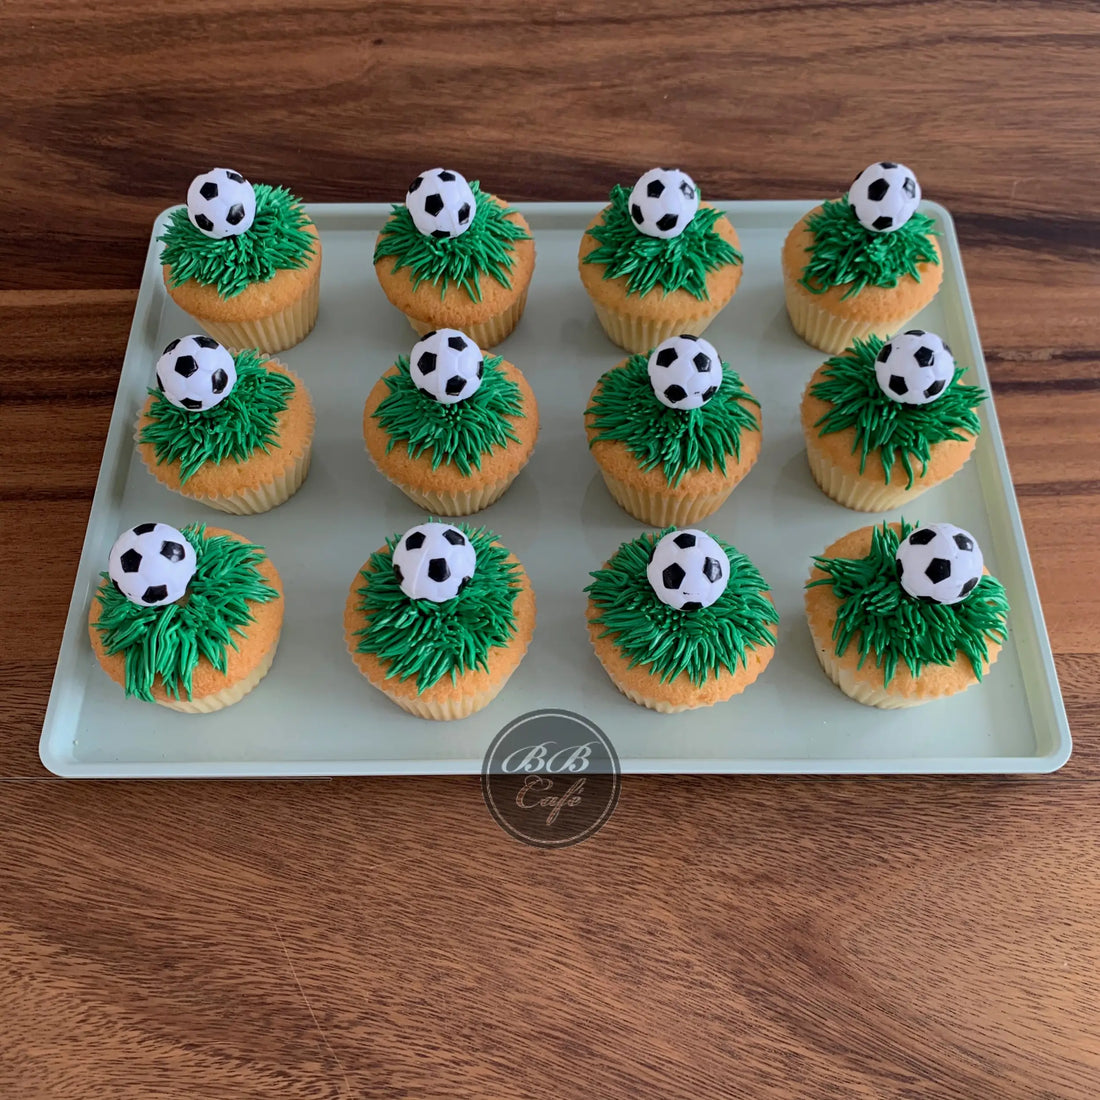 Soccer ball cupcake